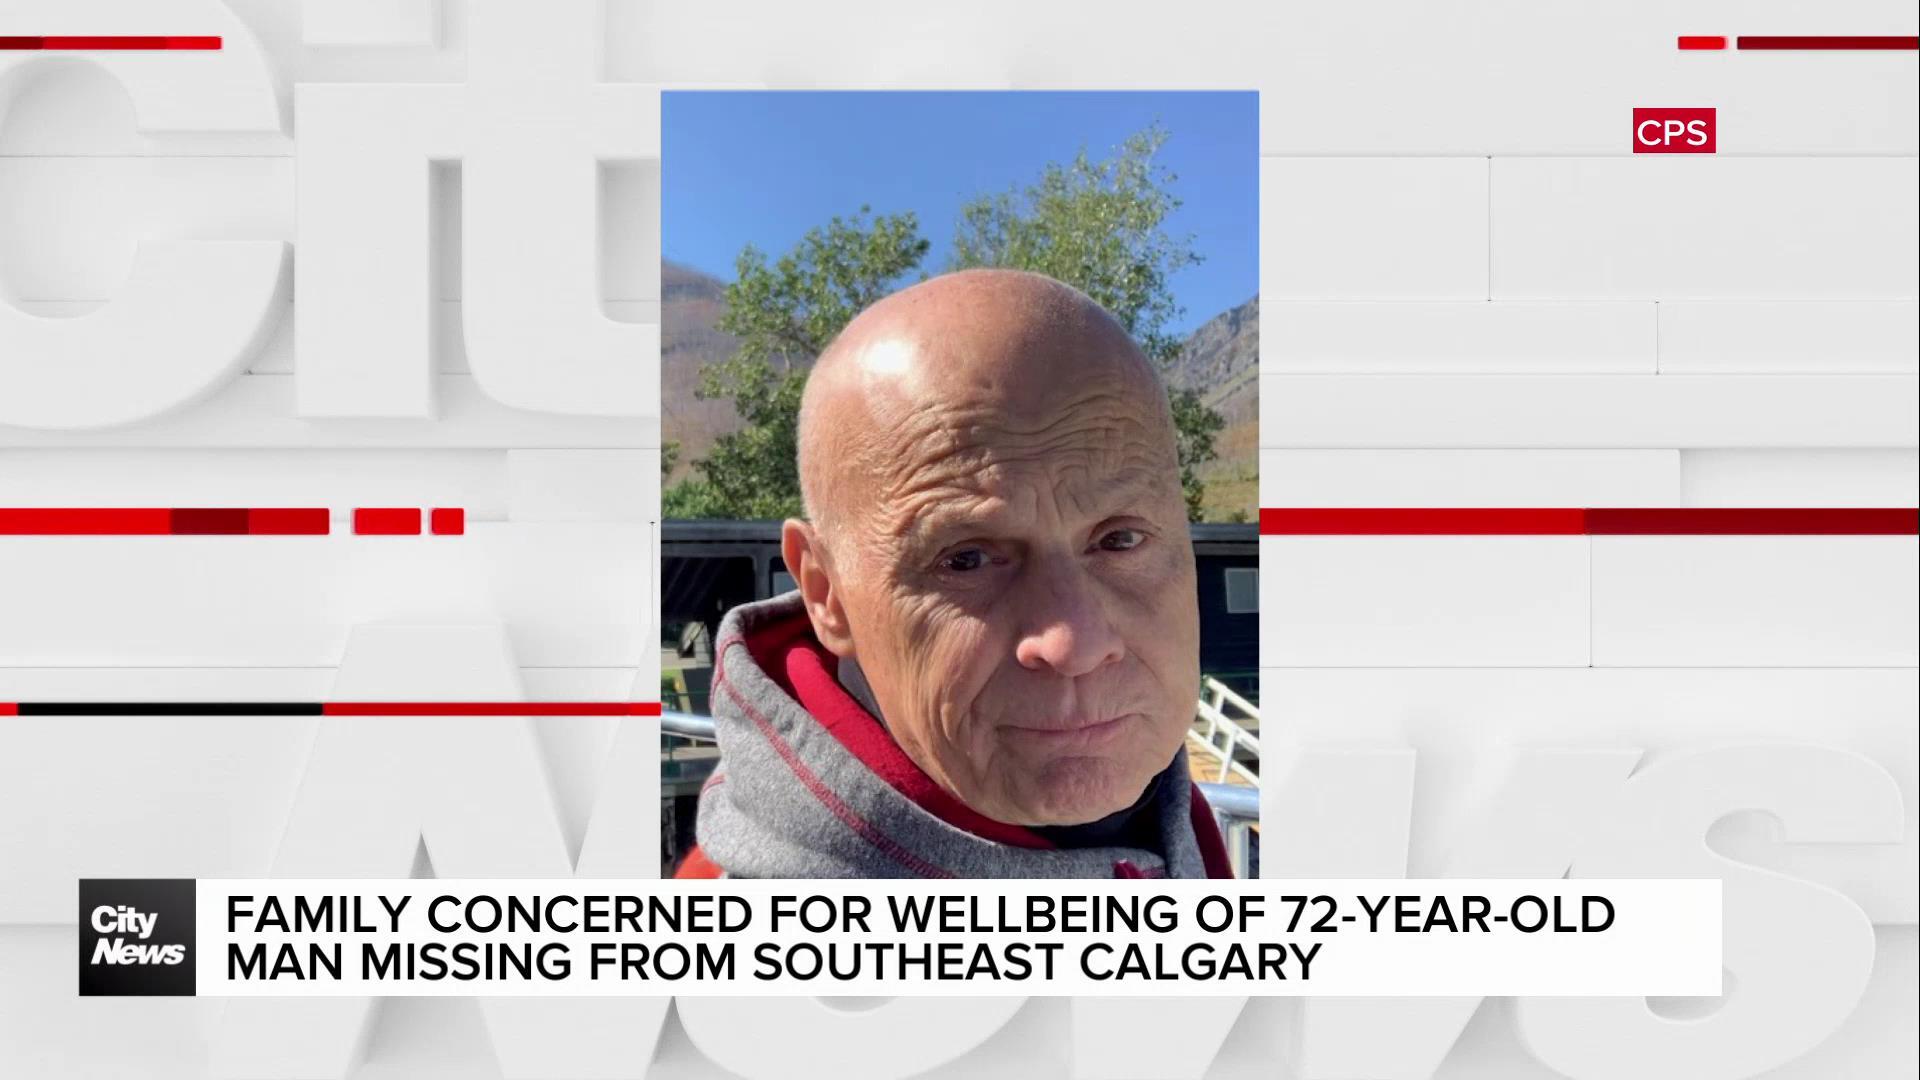 Police seeking public’s help to locate missing SE Calgary man